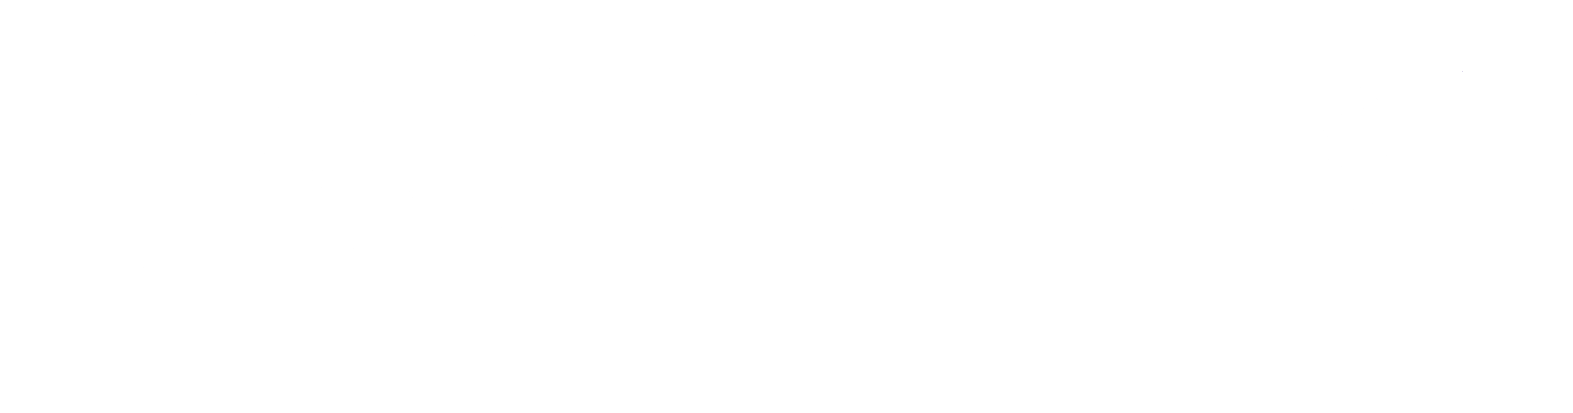 NNSA Logo - News/Press Releases – Exascale